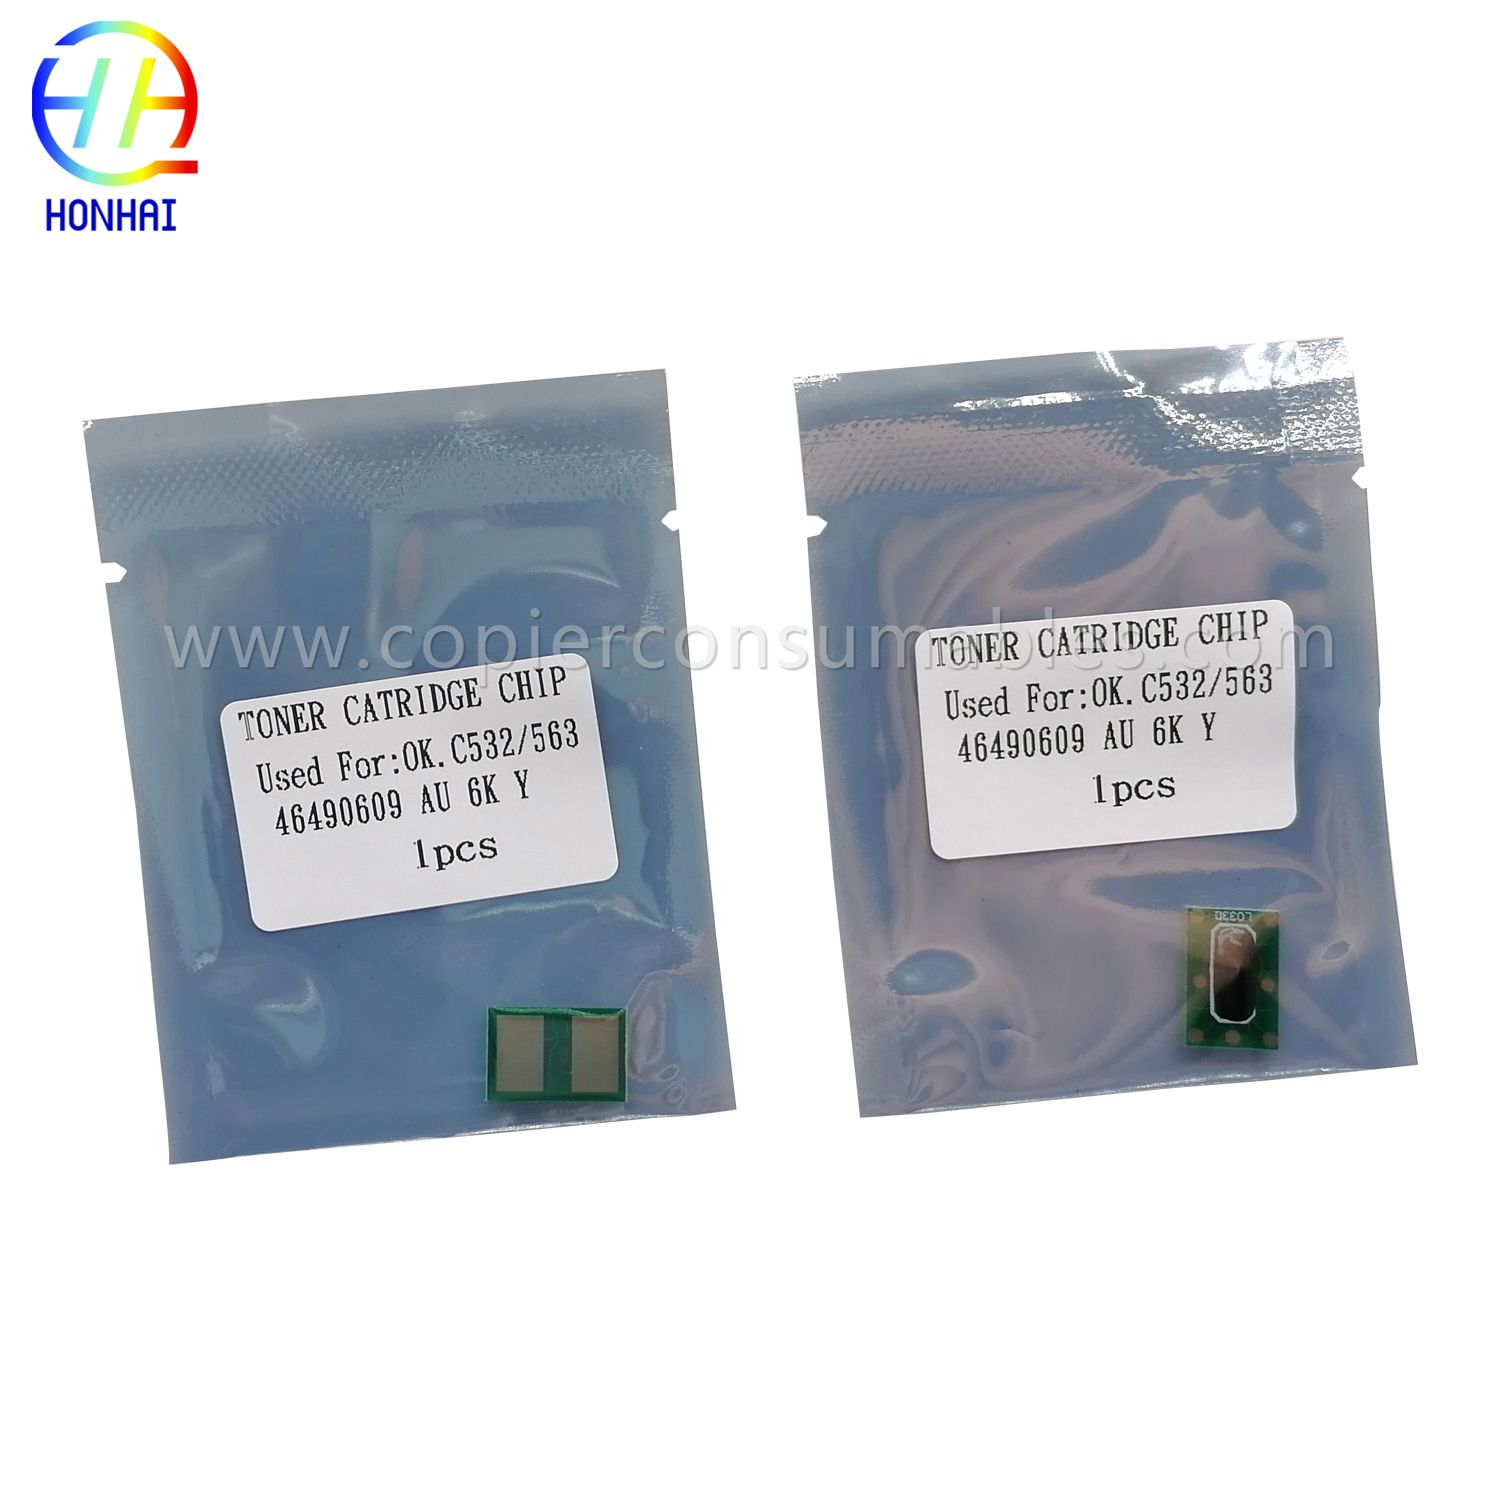 Toner Cartridge Chip maka OKI C532DN MC573DN 6K 46490610 46490611 46490609 46490612(4) 拷贝